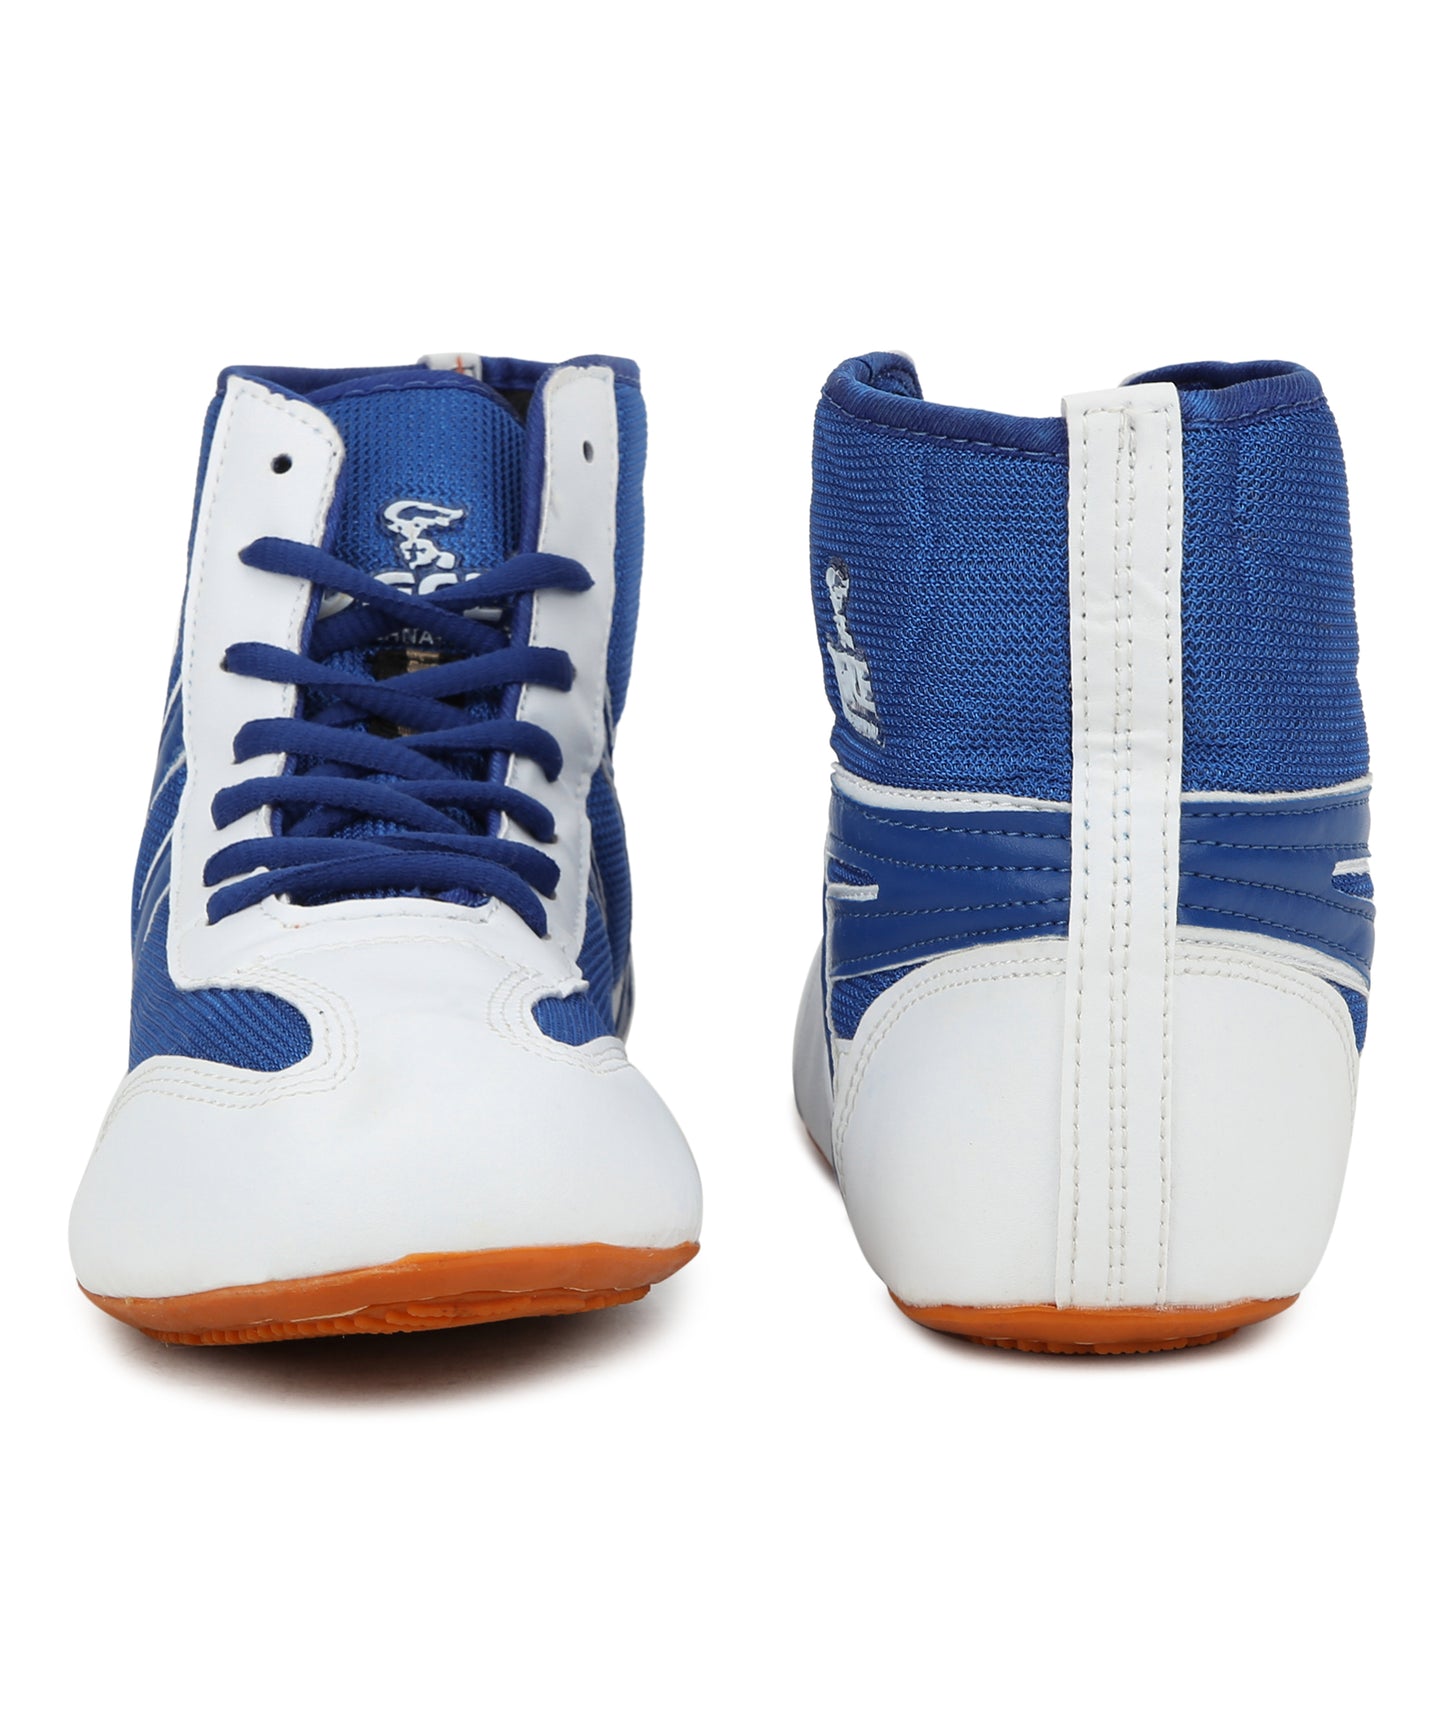 Pace International Kabaddi Shoes (Royal Blue/ White)